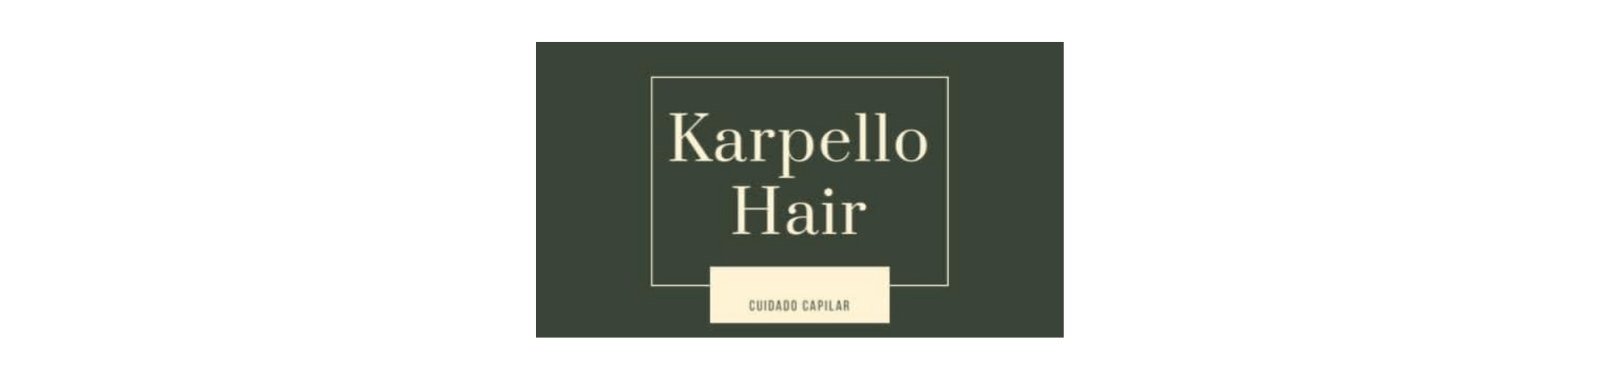 Karpello Hair